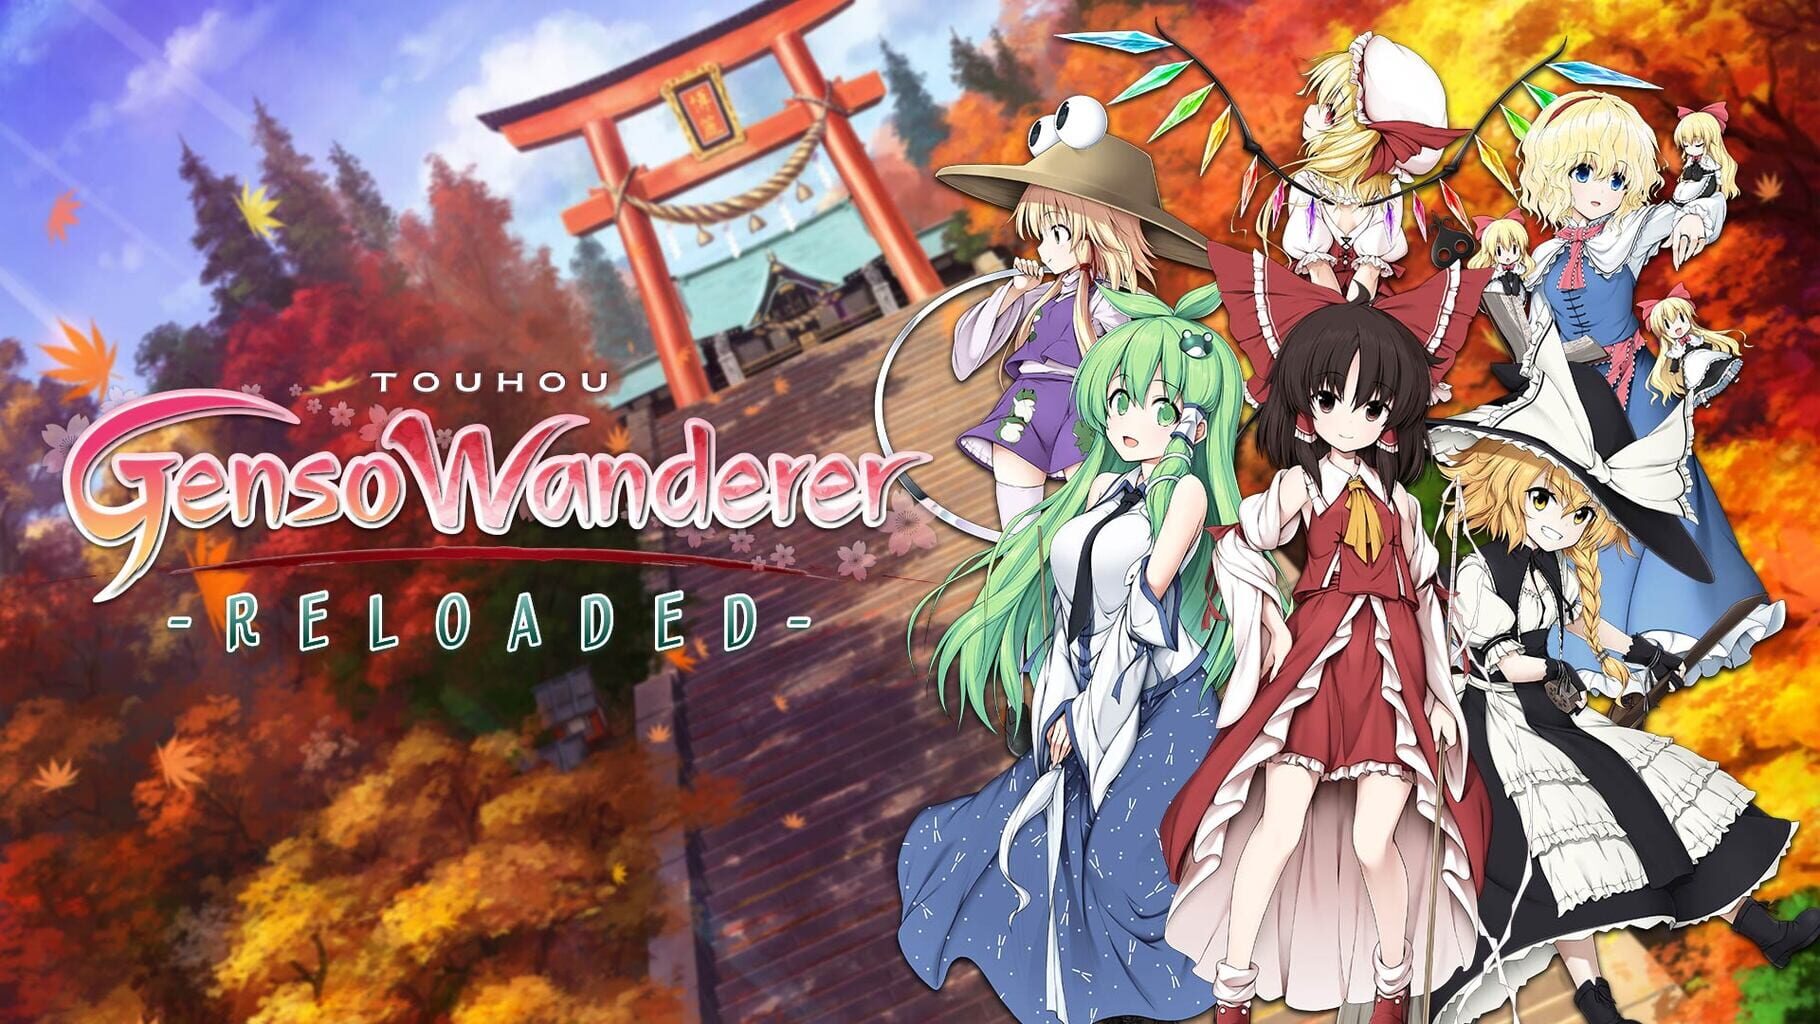 Touhou Genso Wanderer Reloaded artwork